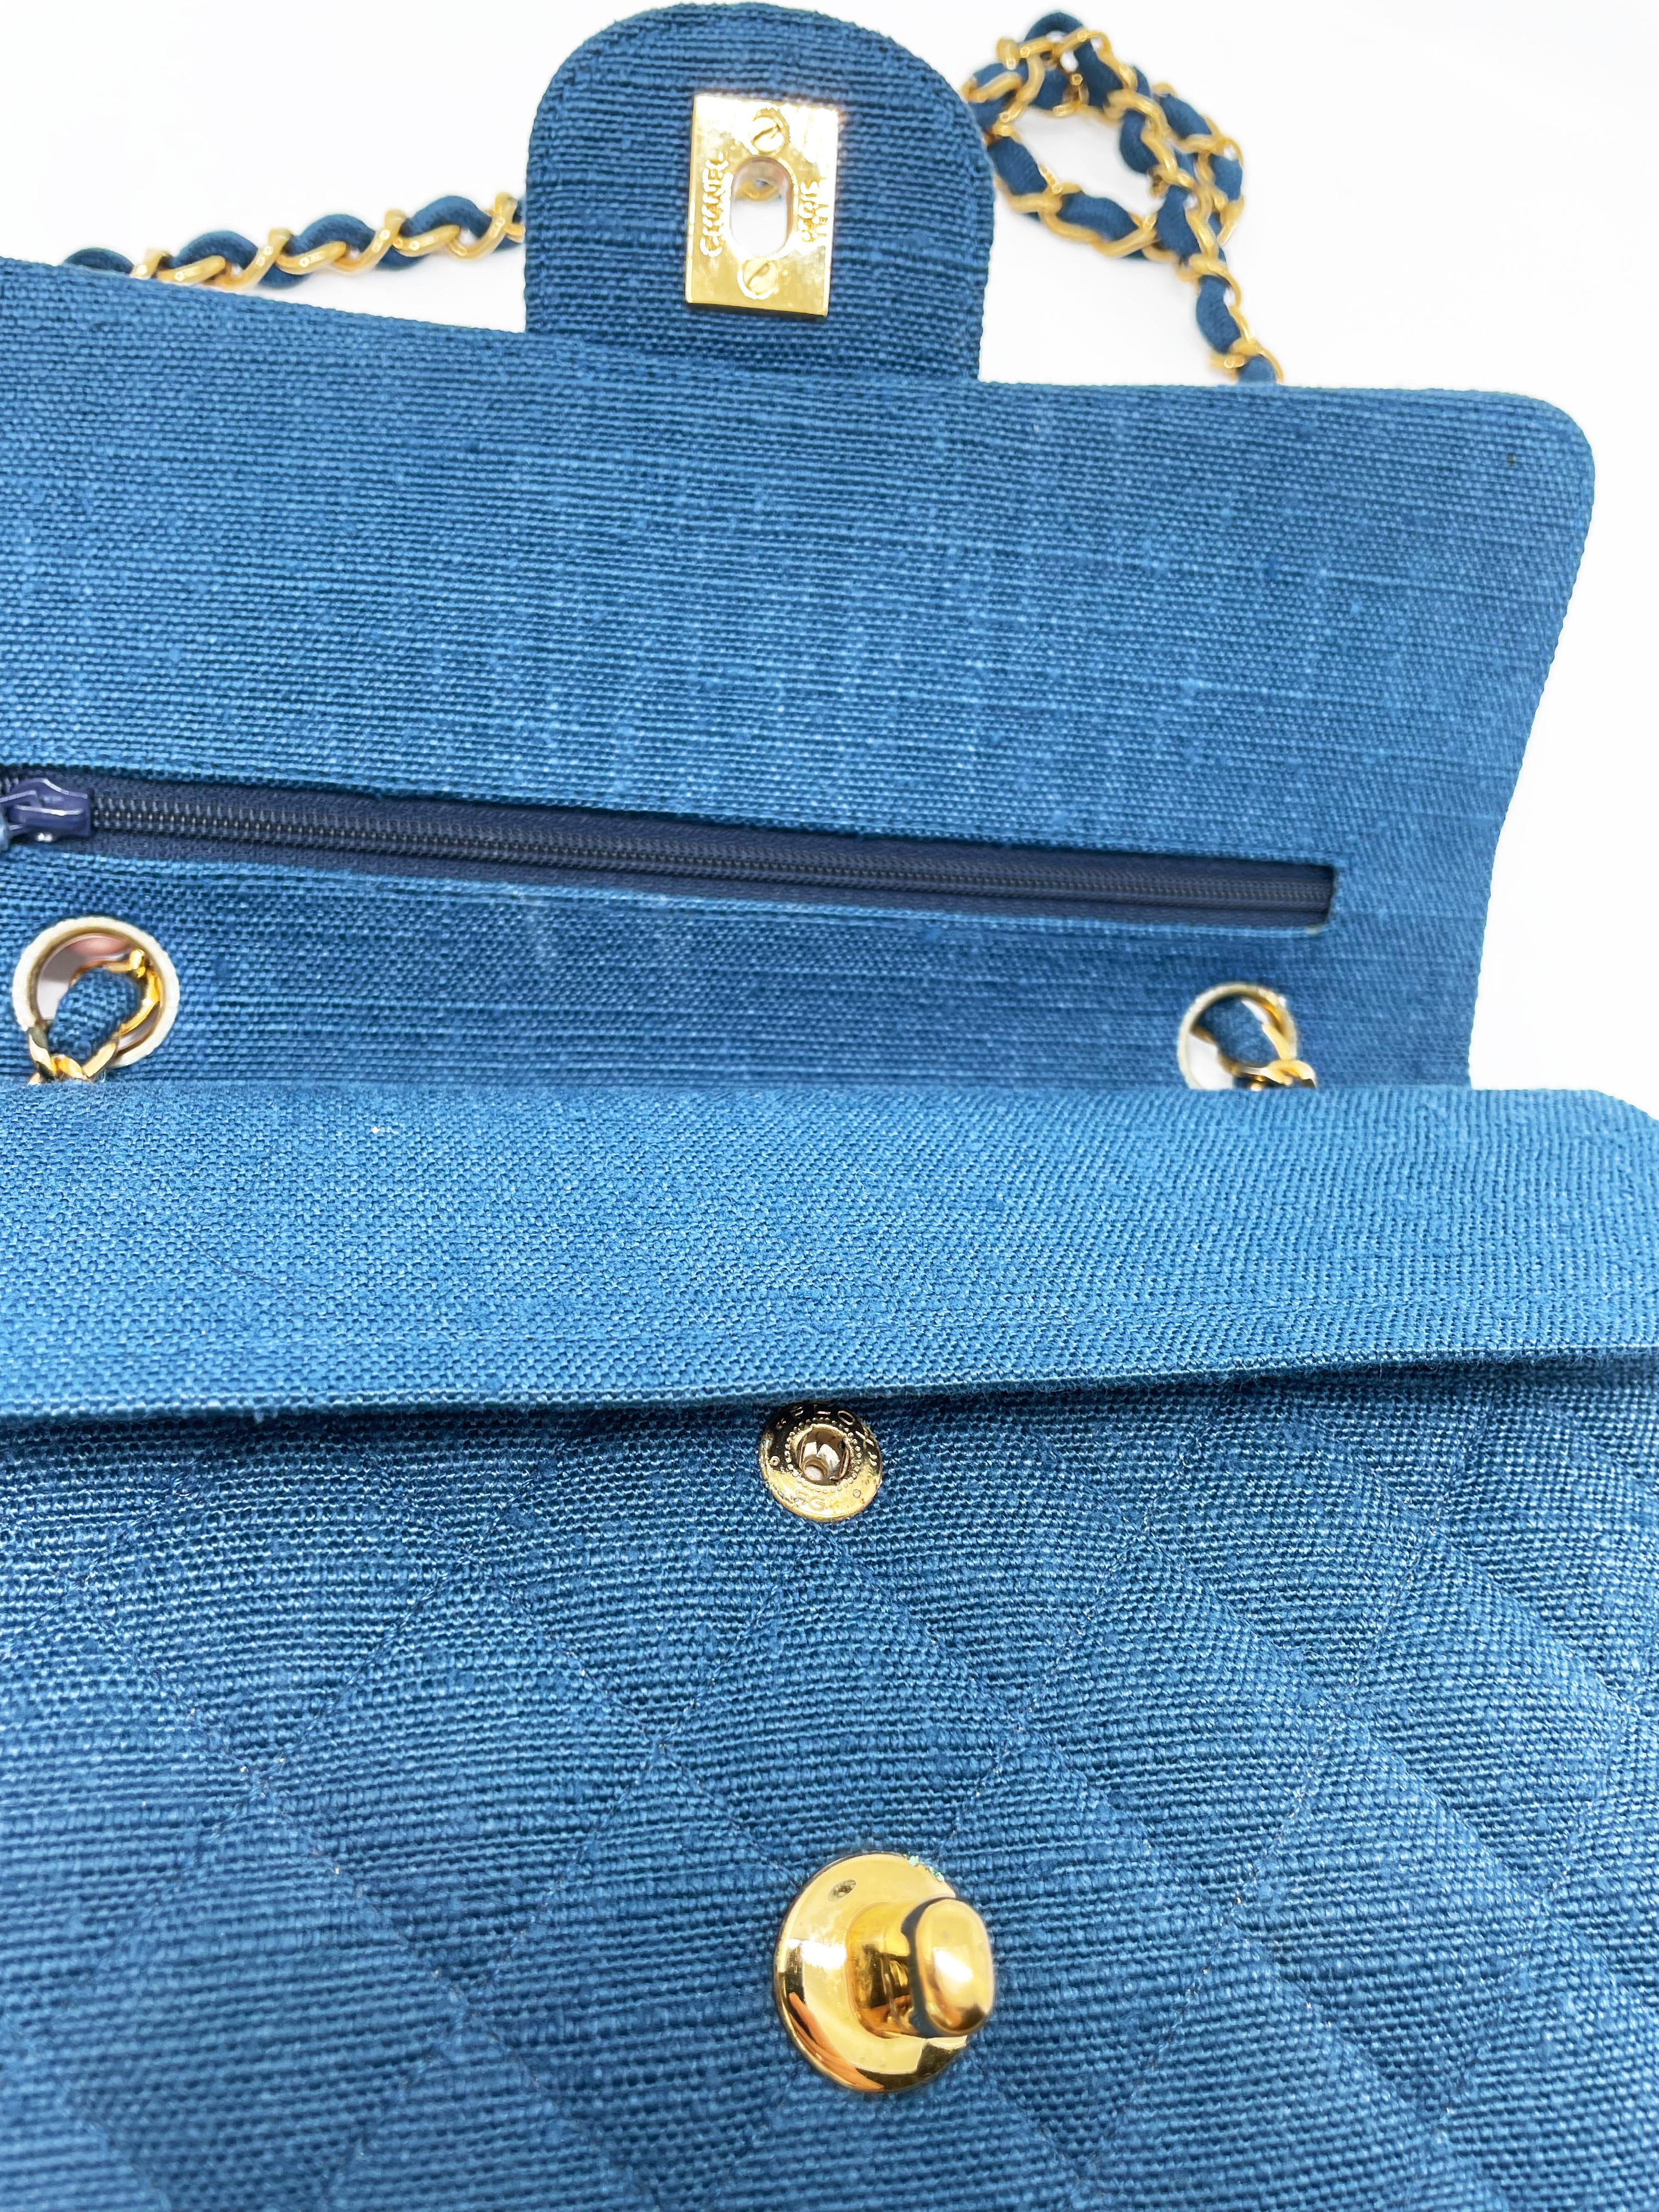 Small Classic Chanel Blue Denim Bag 9